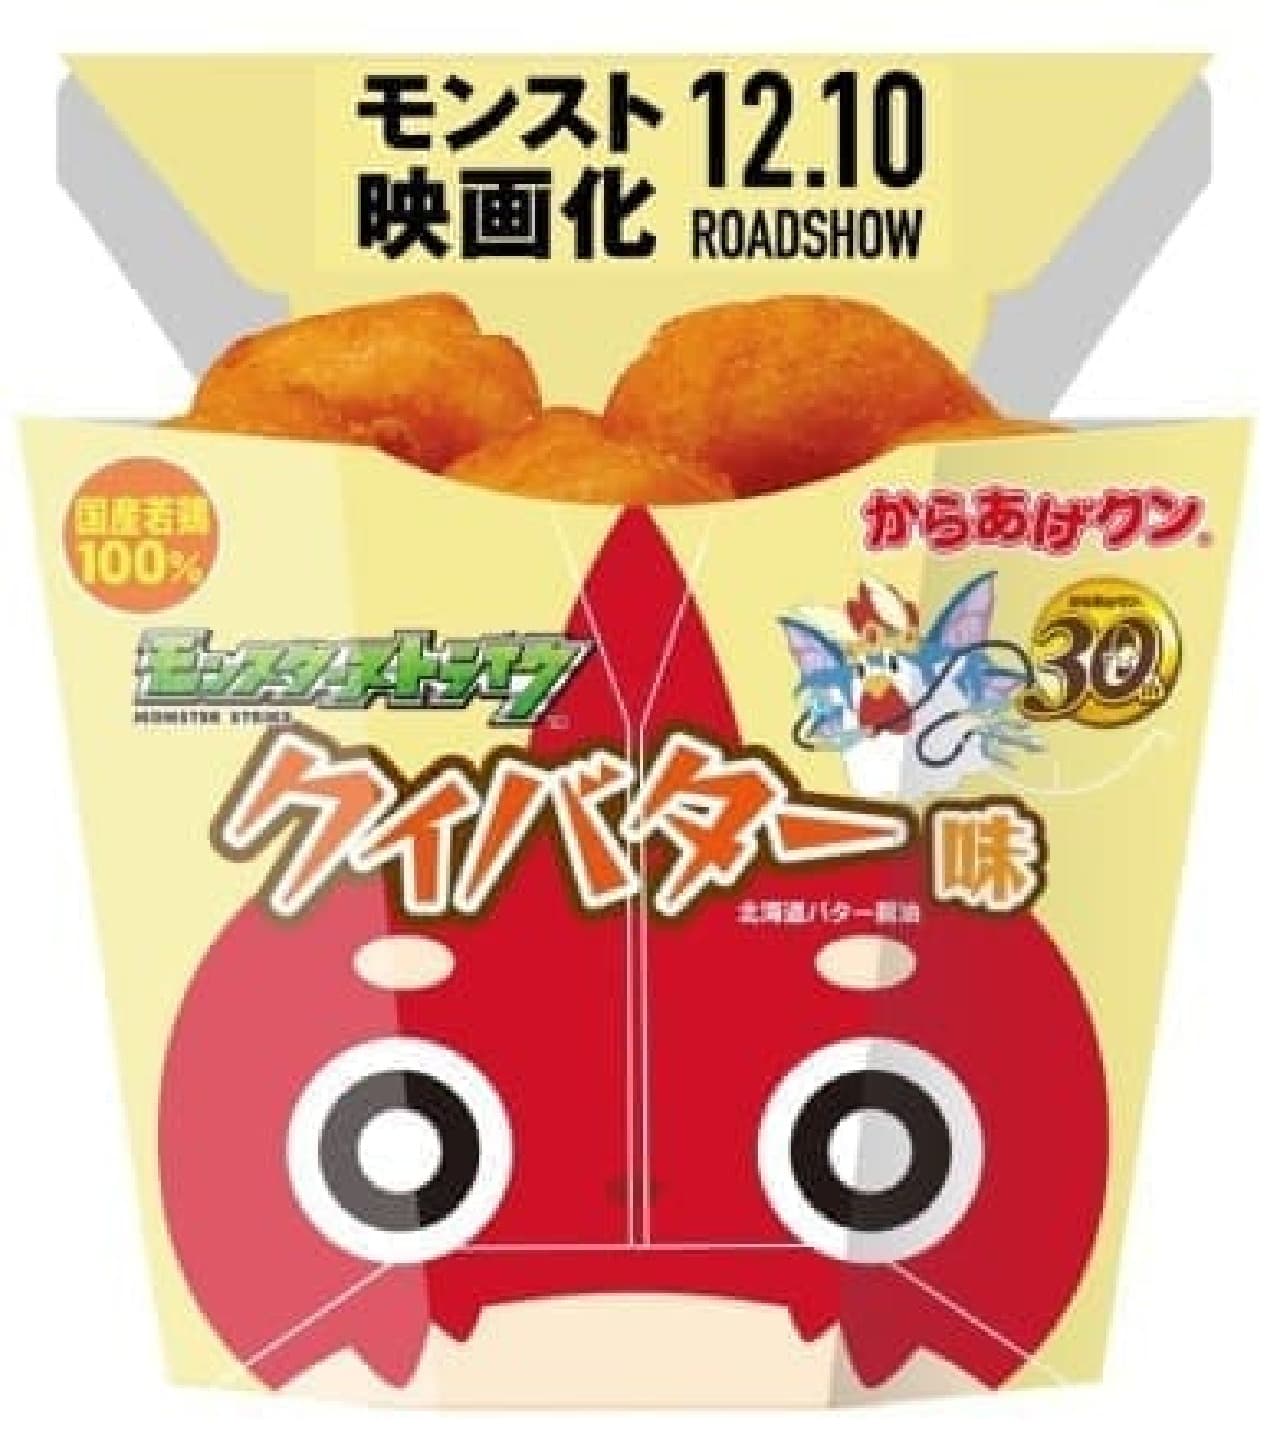 Lawson and Monster Strike's "Karaage Kunkui Butter Flavor (Hokkaido Butter Soy Sauce)"